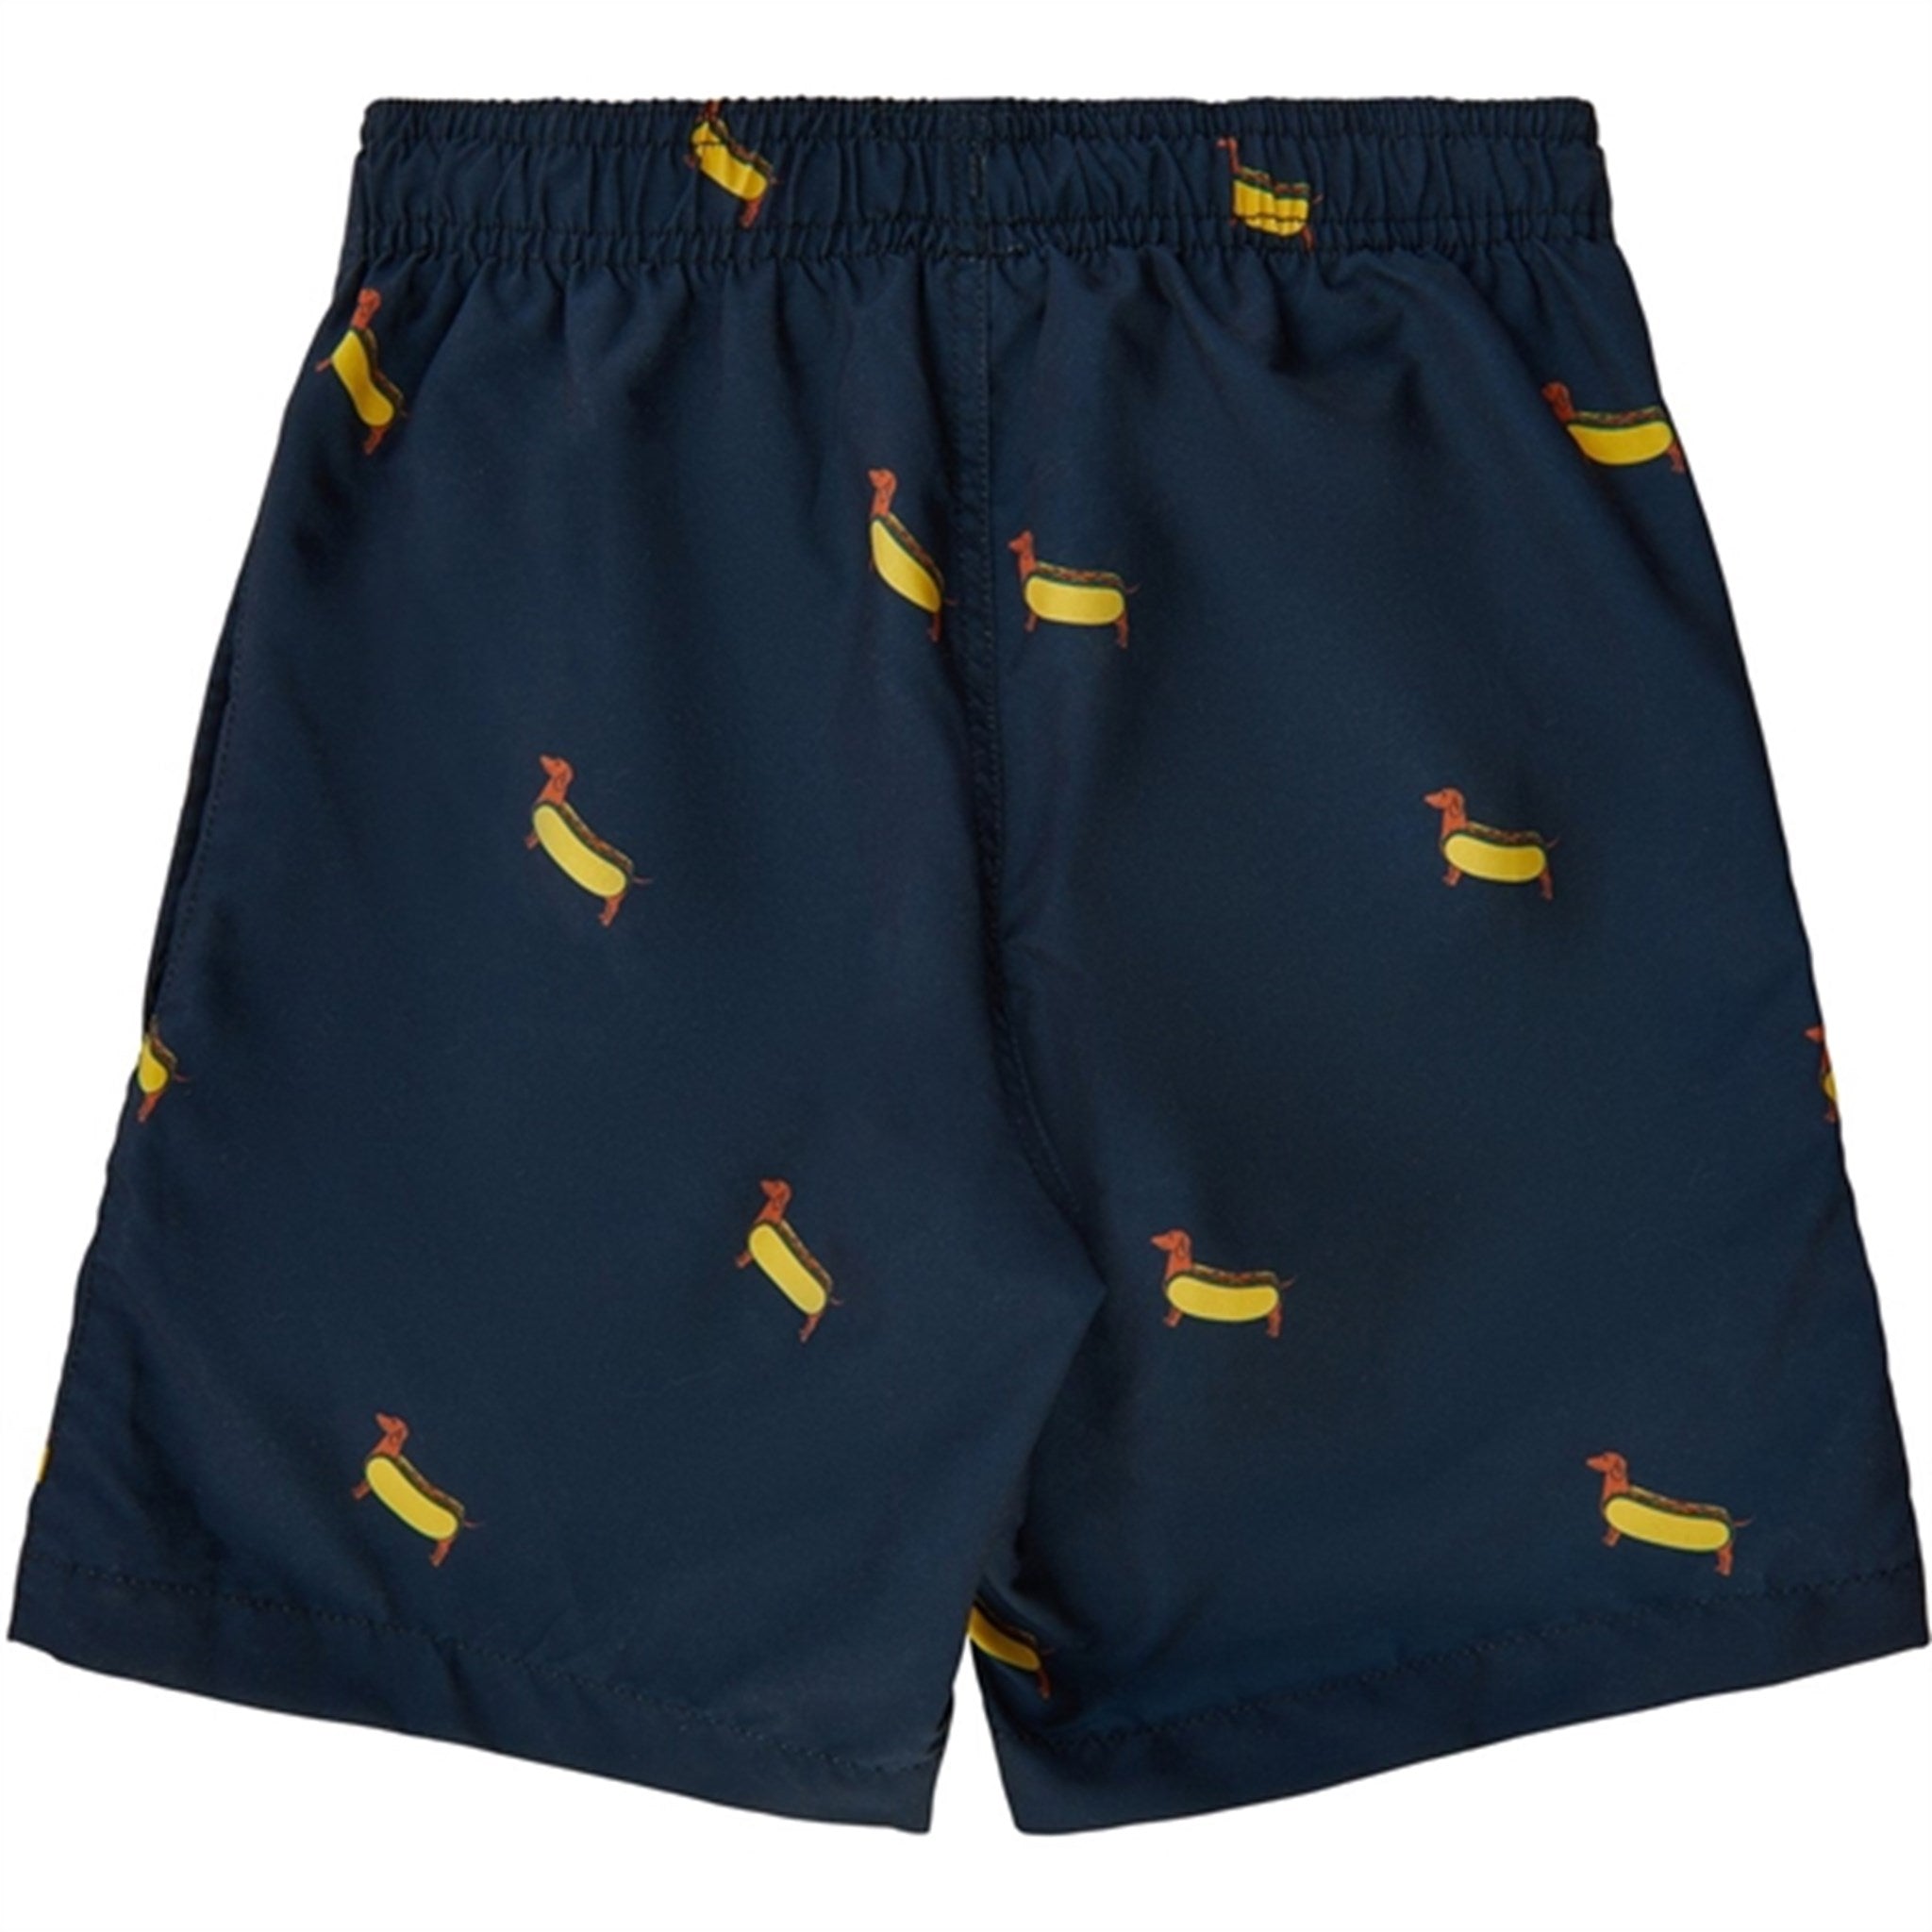 THE NEW Navy Blazer Fuller Swim Shorts 2